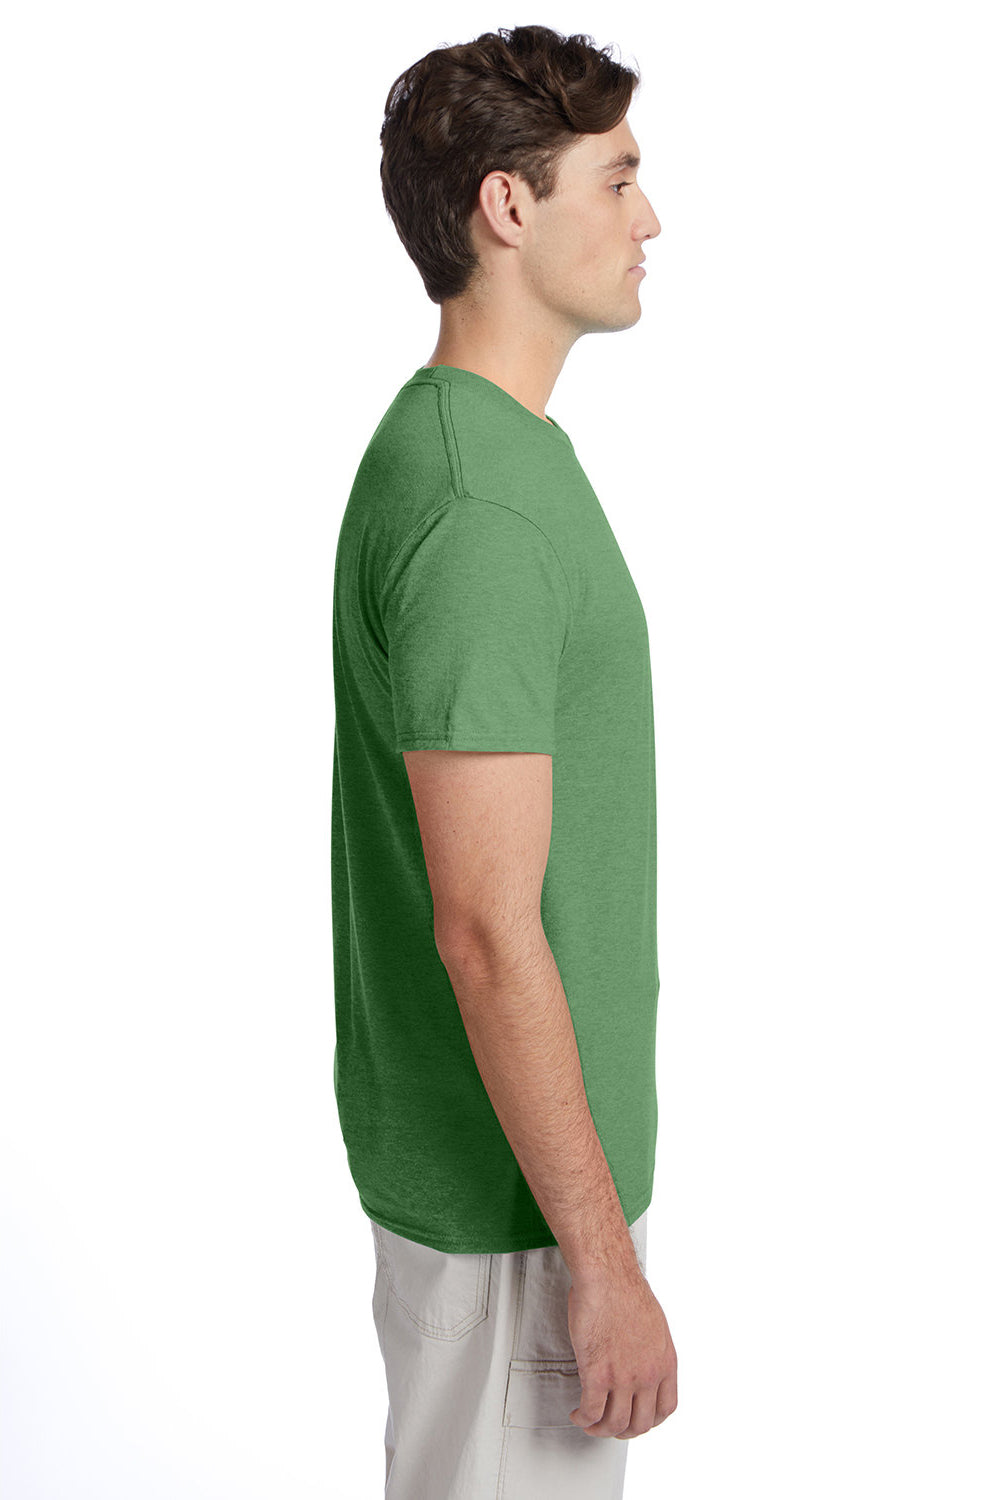 Hanes 42TB Mens X-Temp FreshIQ Moisture Wicking Short Sleeve Crewneck T-Shirt Heather True Green SIde